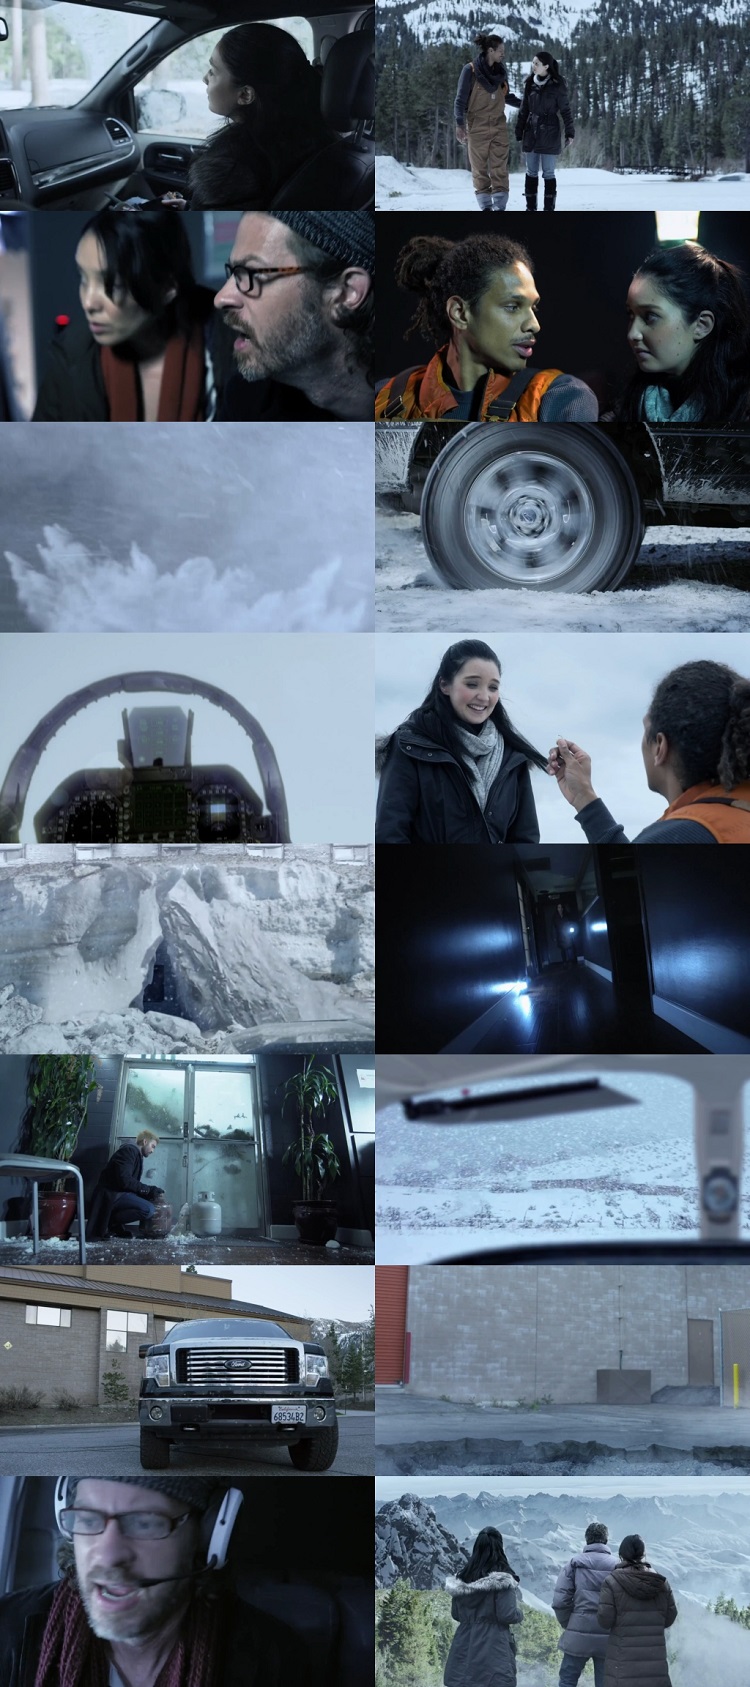 Arctic Apocalypse 2019 Hindi Dual Audio Web-DL Full Movie 480p Free Download